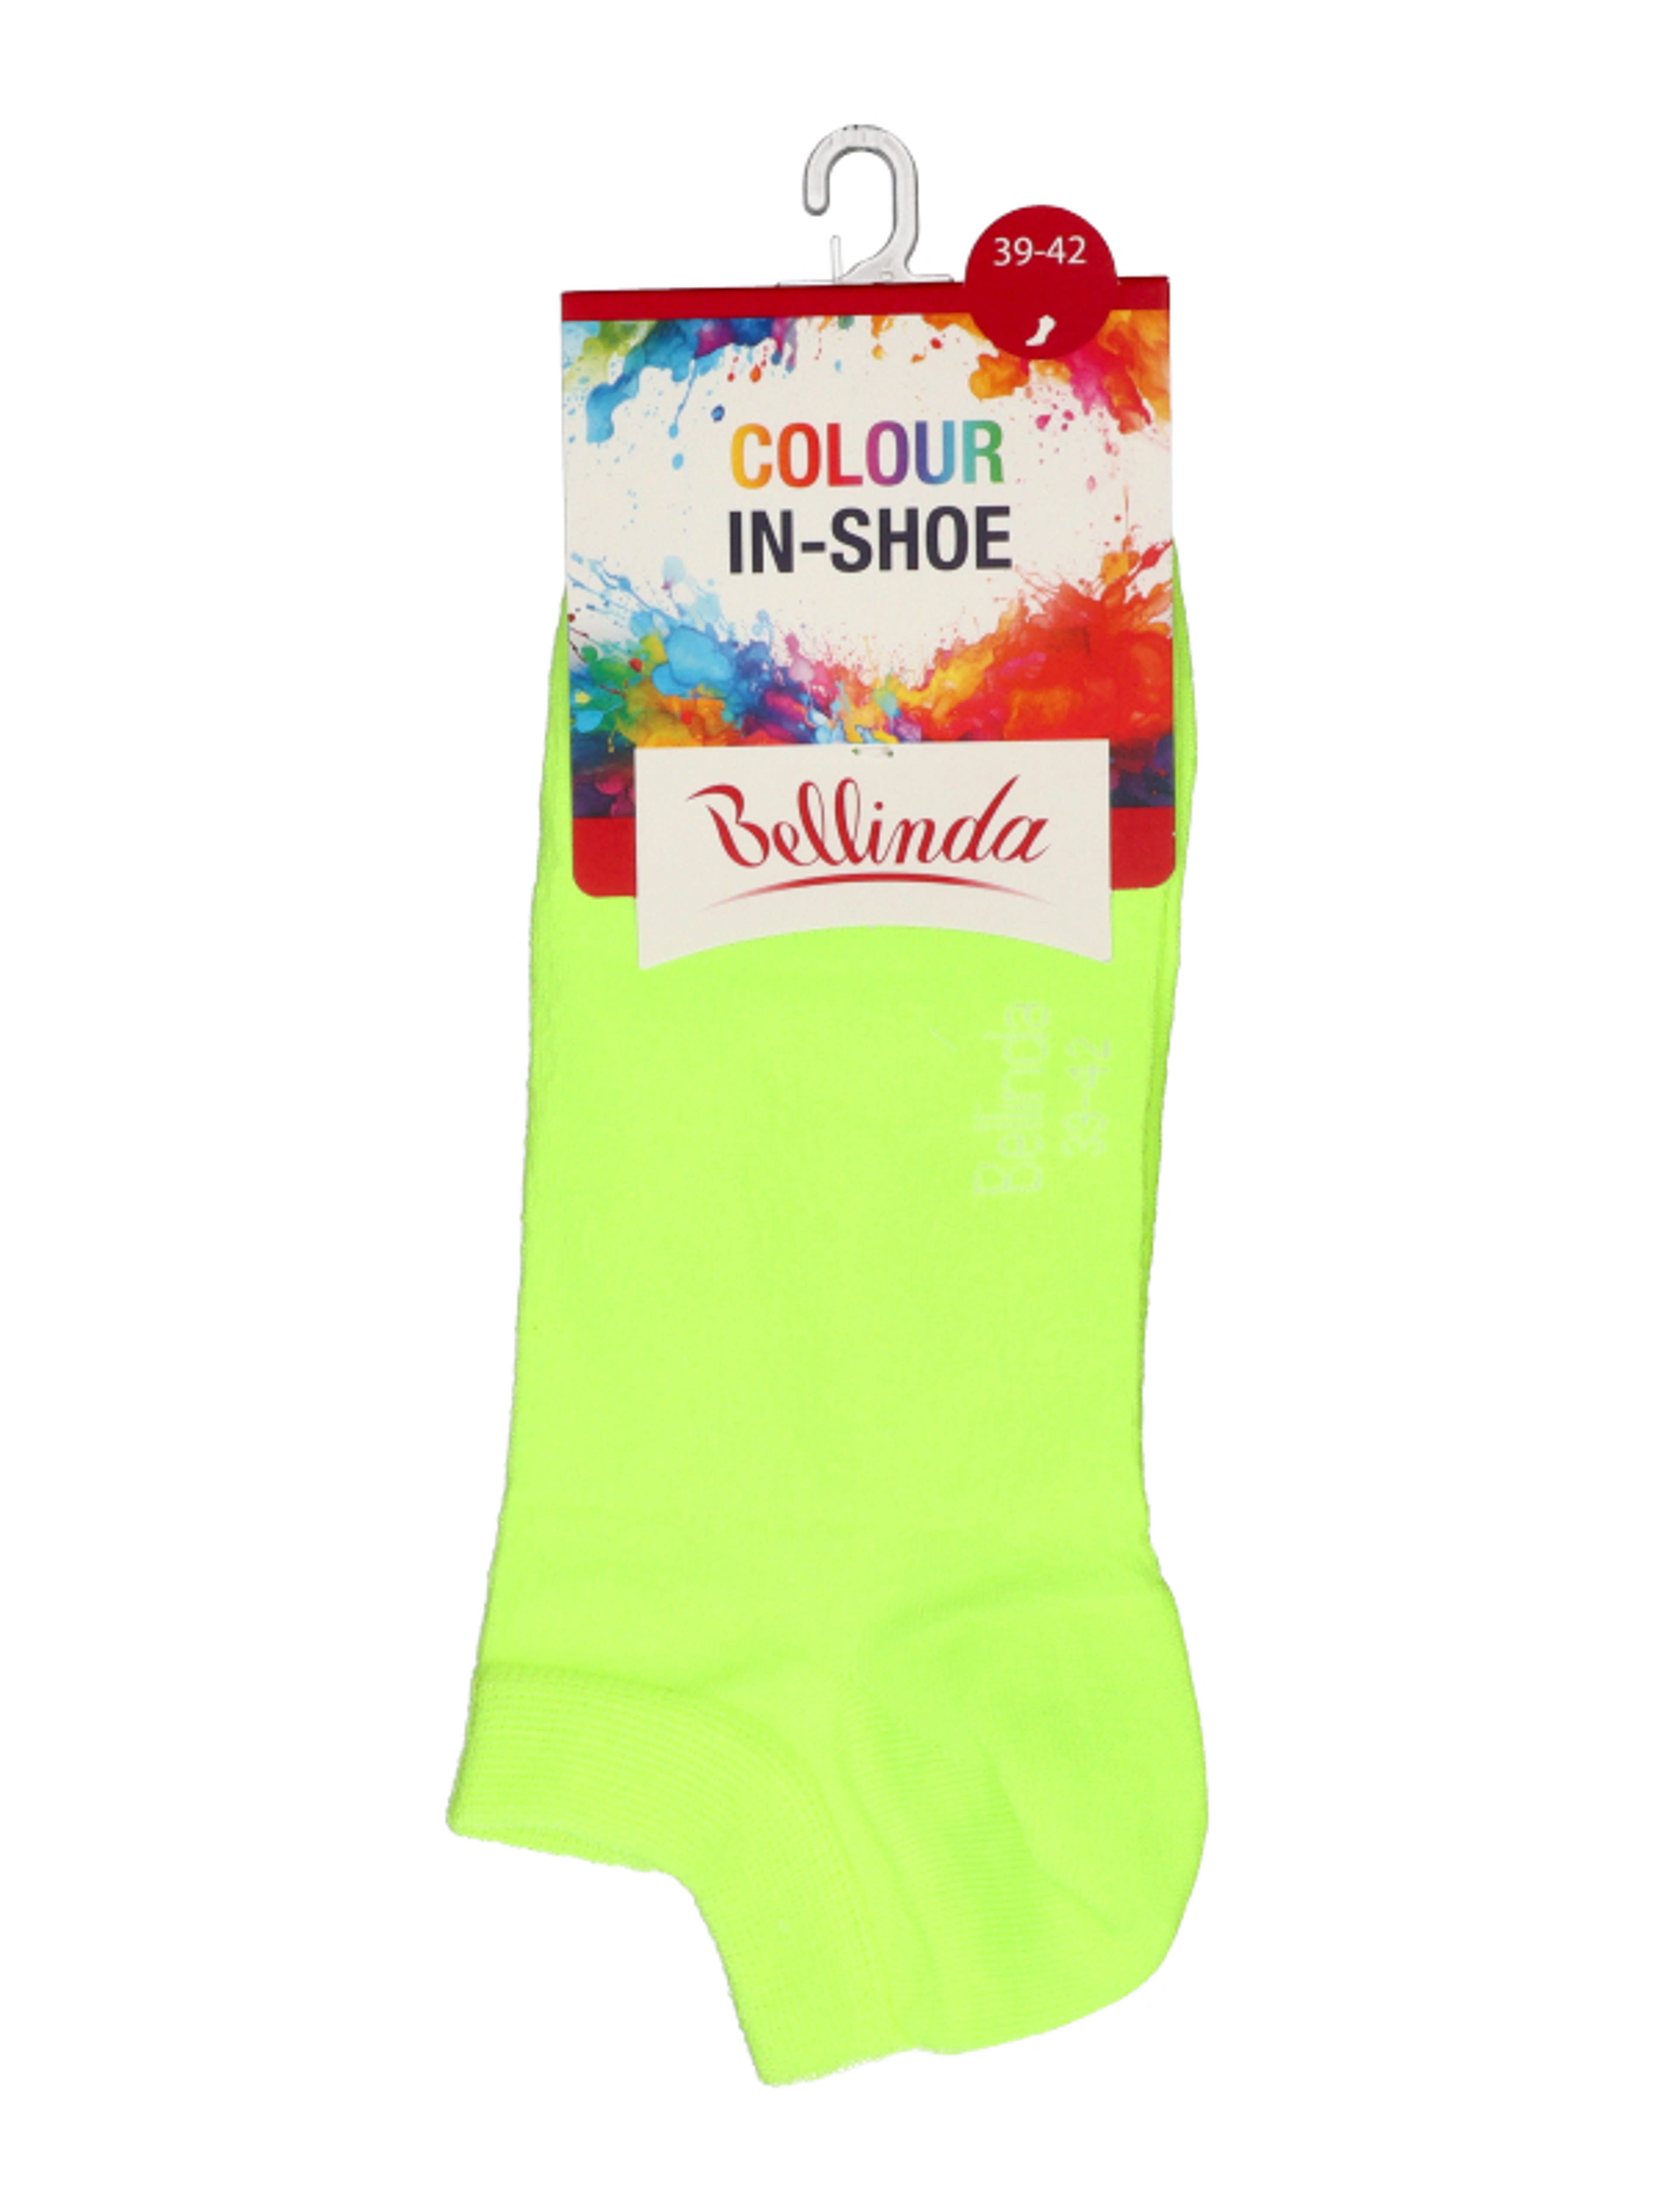 Bellina In-Shoe női zokni /neon zöld 39-42 - 1 db